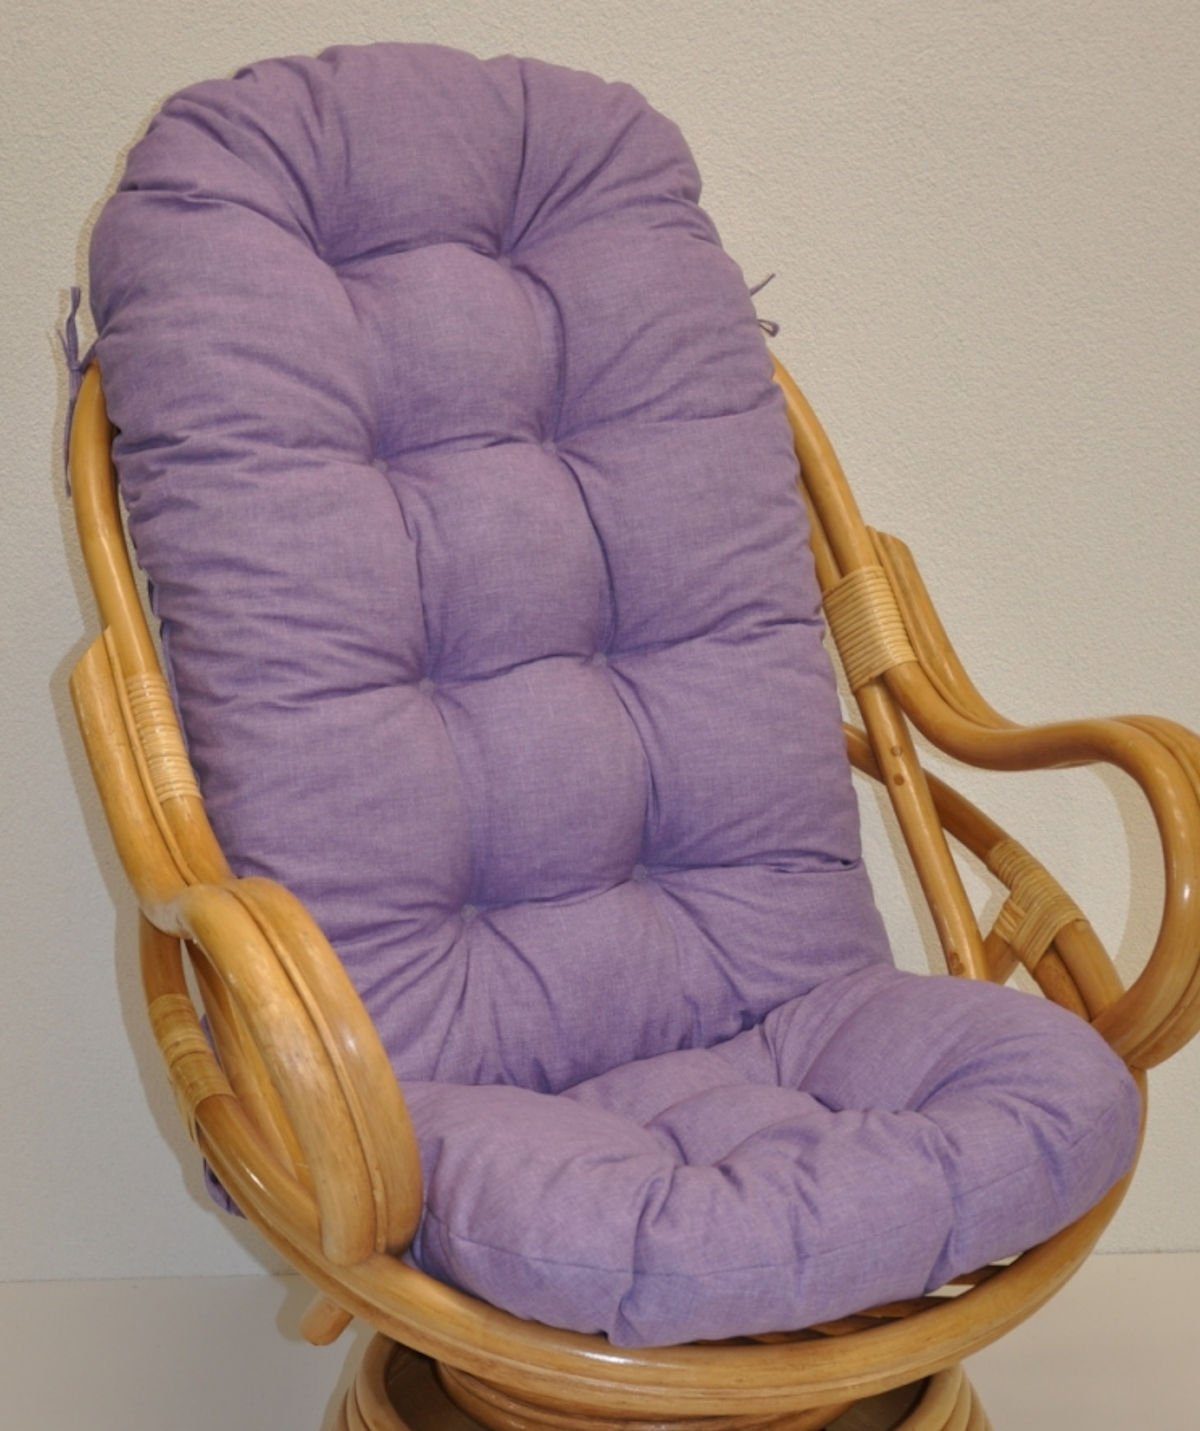 Rattani Sesselauflage Polster für Rattan Schaukelstuhl, Drehsessel L 135 cm, Color violett